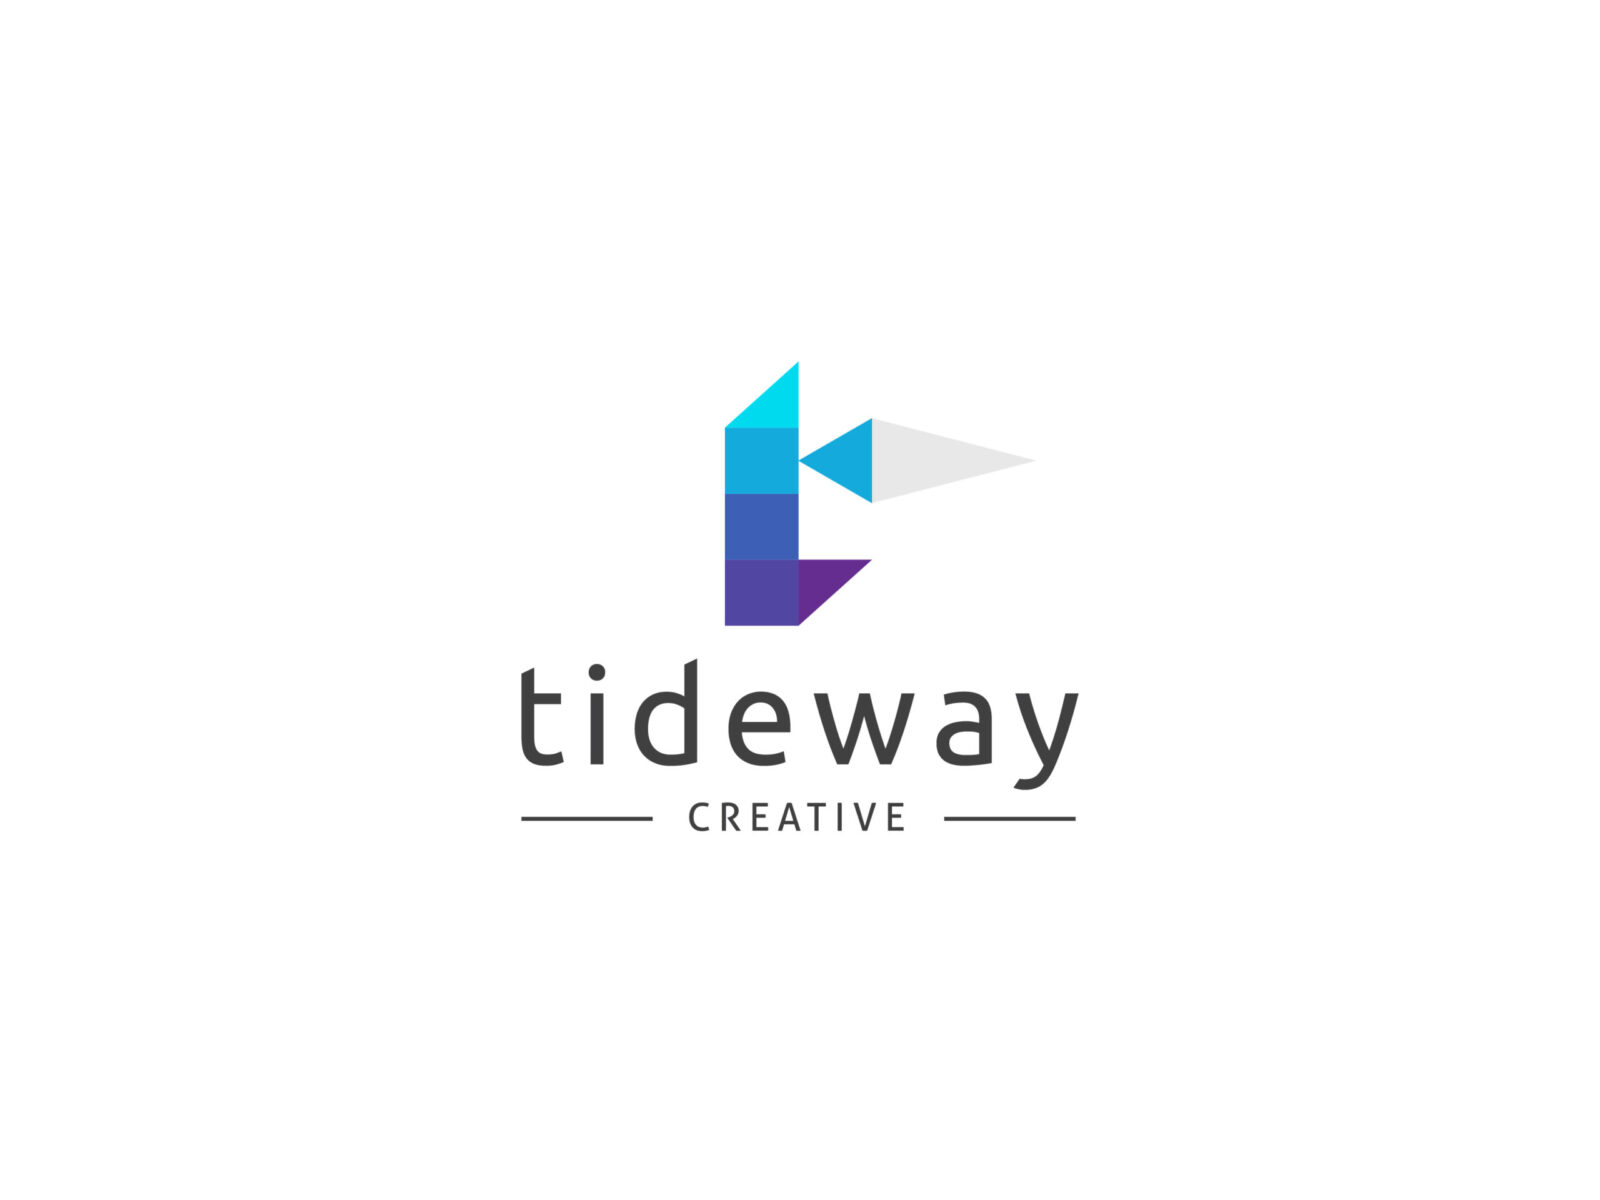 Tideway Creative